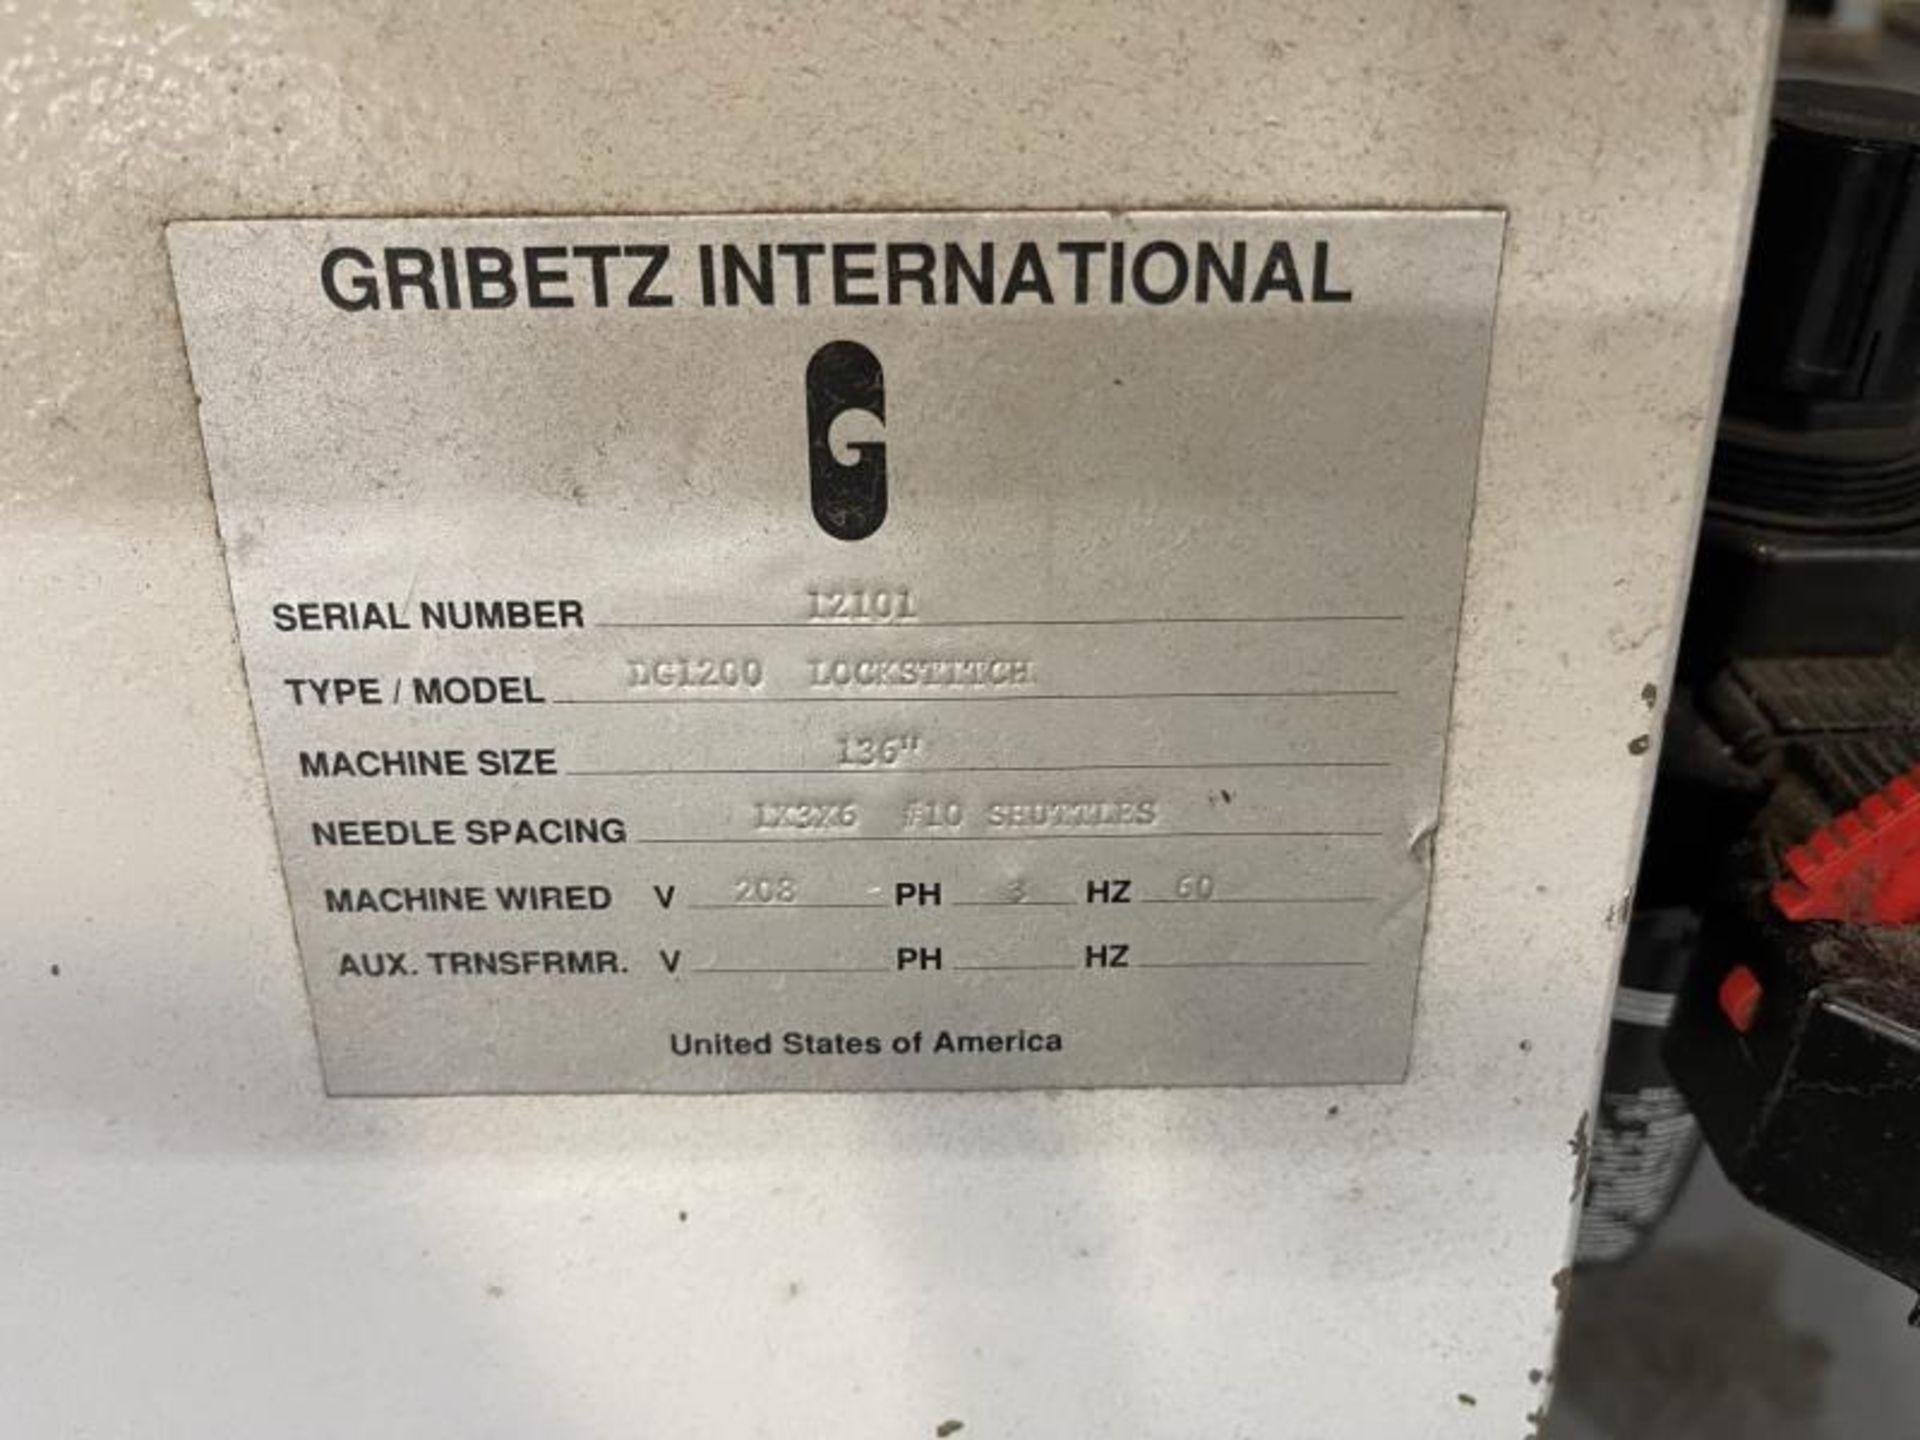 Gribetz Bedspread Quilting Machine 136" Needle Spacing 1x3x6 Shutters #10, M: DG1200 Lockstitch - Image 25 of 25